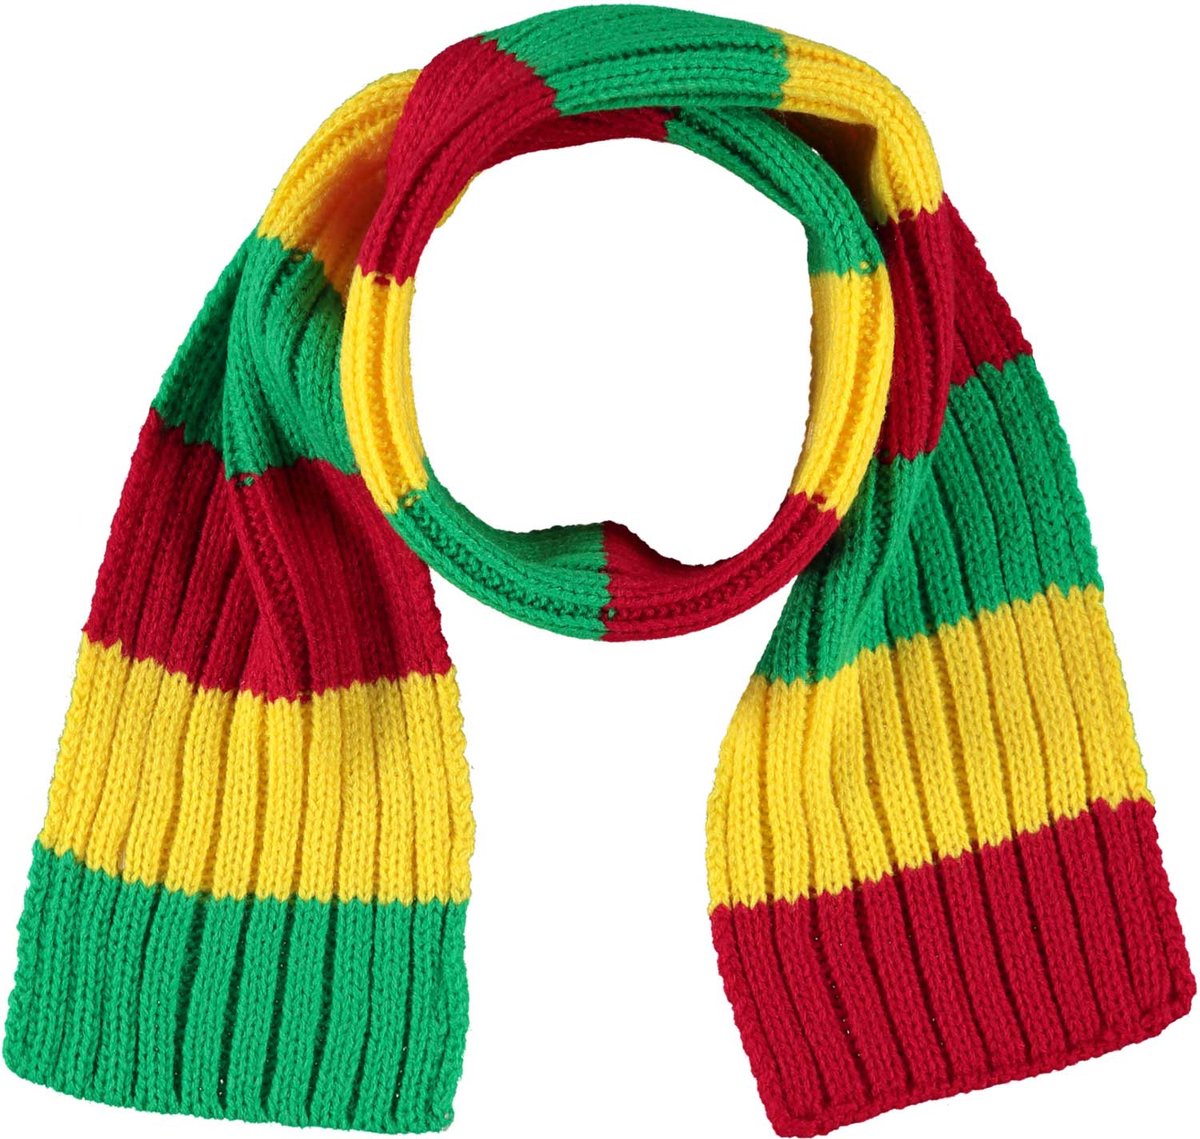 Feest kindersjaal 2 x 2 rib - rood-geel-groen - junior - Sjaal meisje - Sjaal jongen - Carnaval - Kinder sjaal - Sjaal kind - Gekleurde sjaal - Apollo